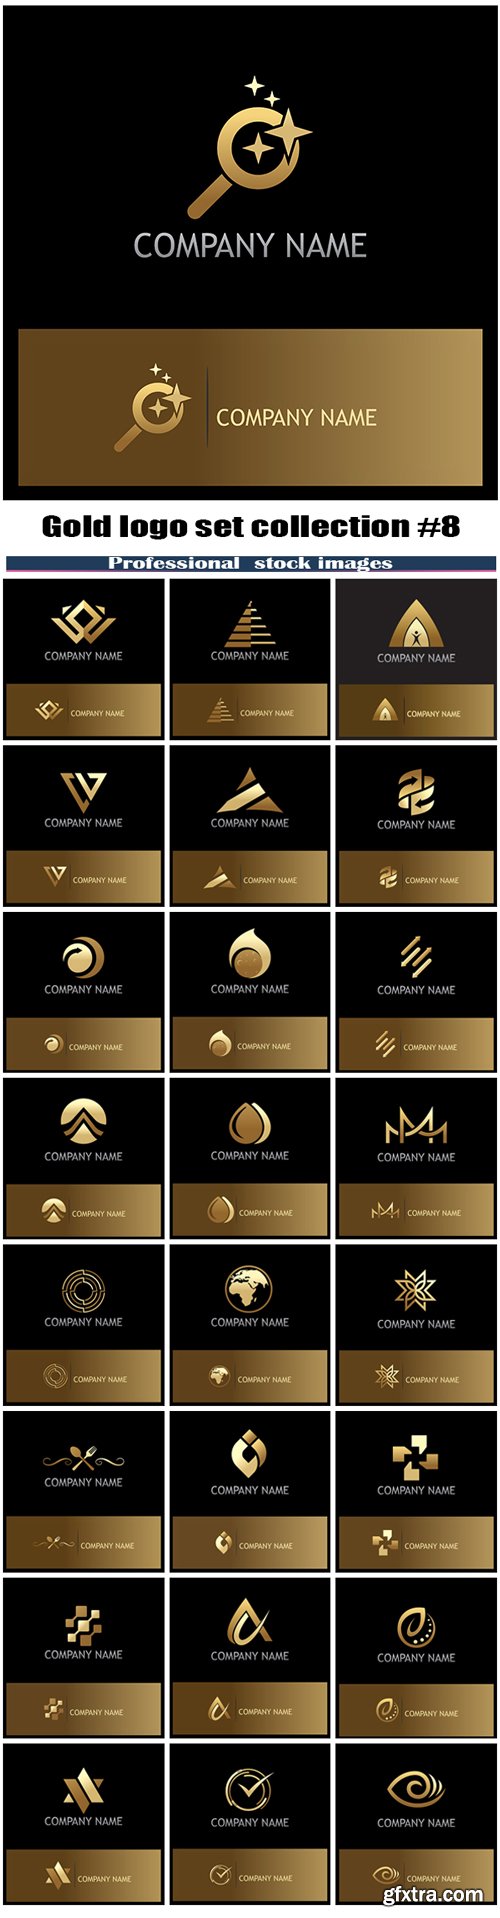 Gold logo set collection #8